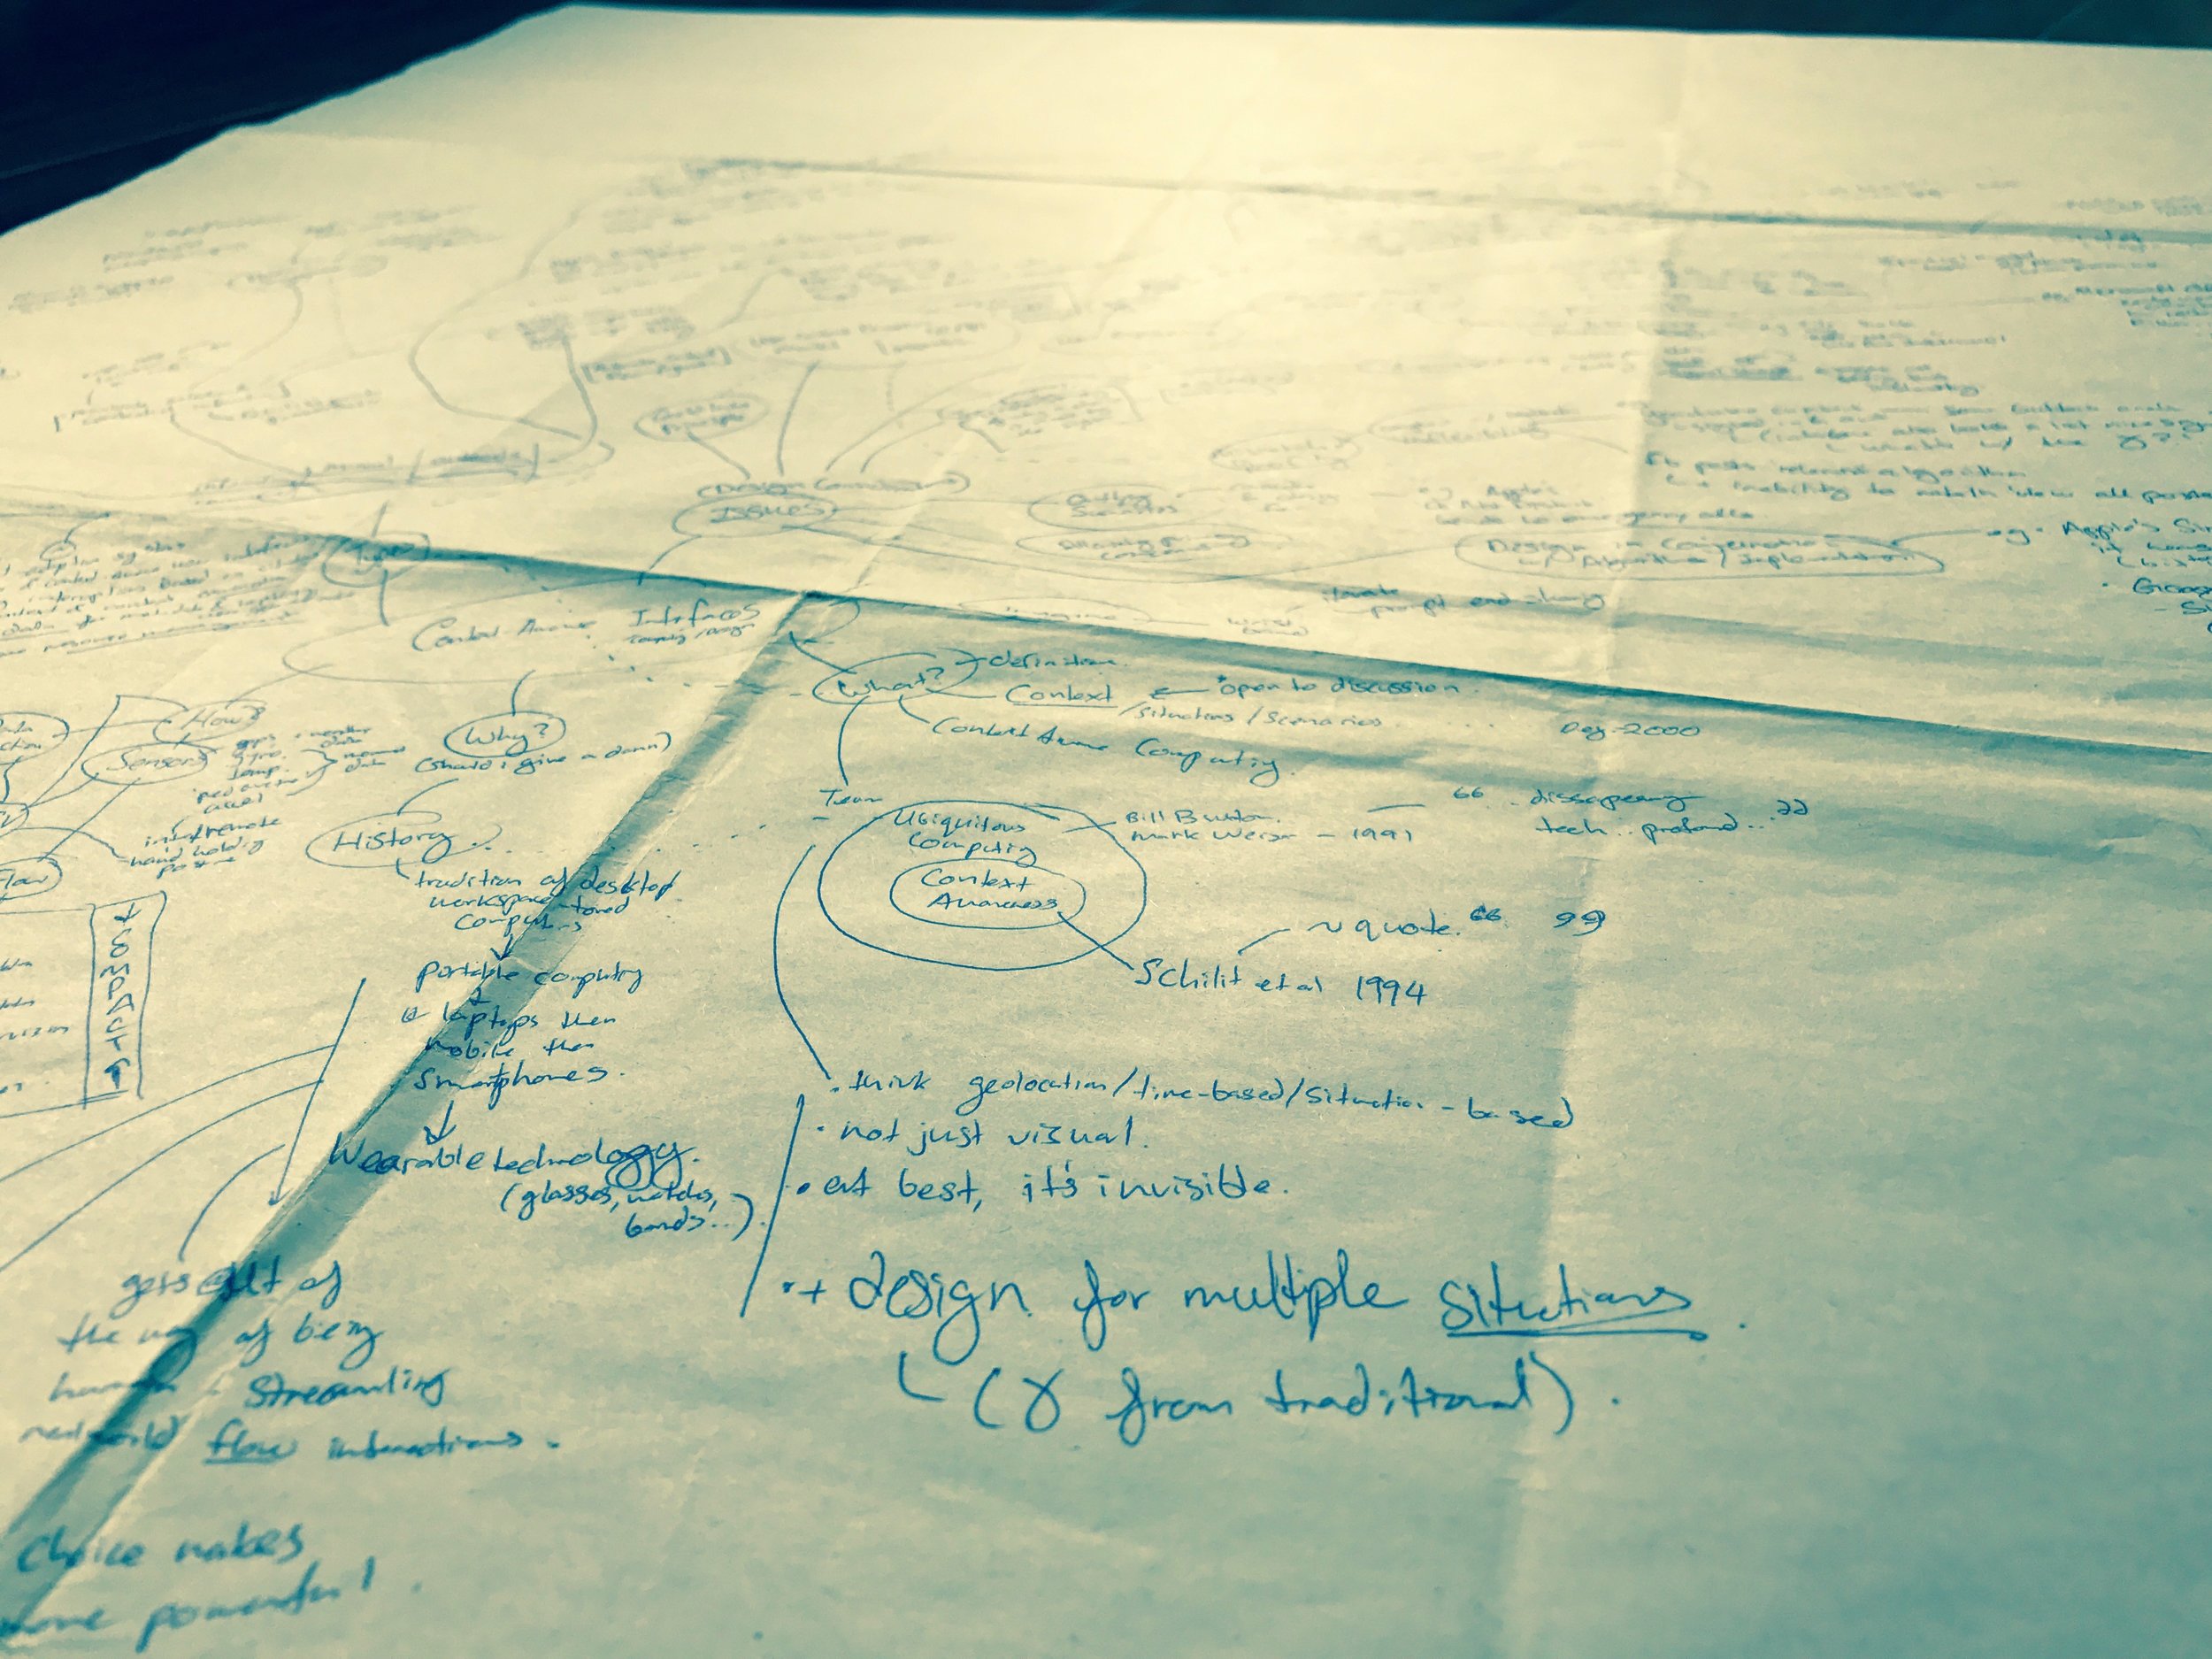 Pen and Paper Brainstorm of Design Improvements